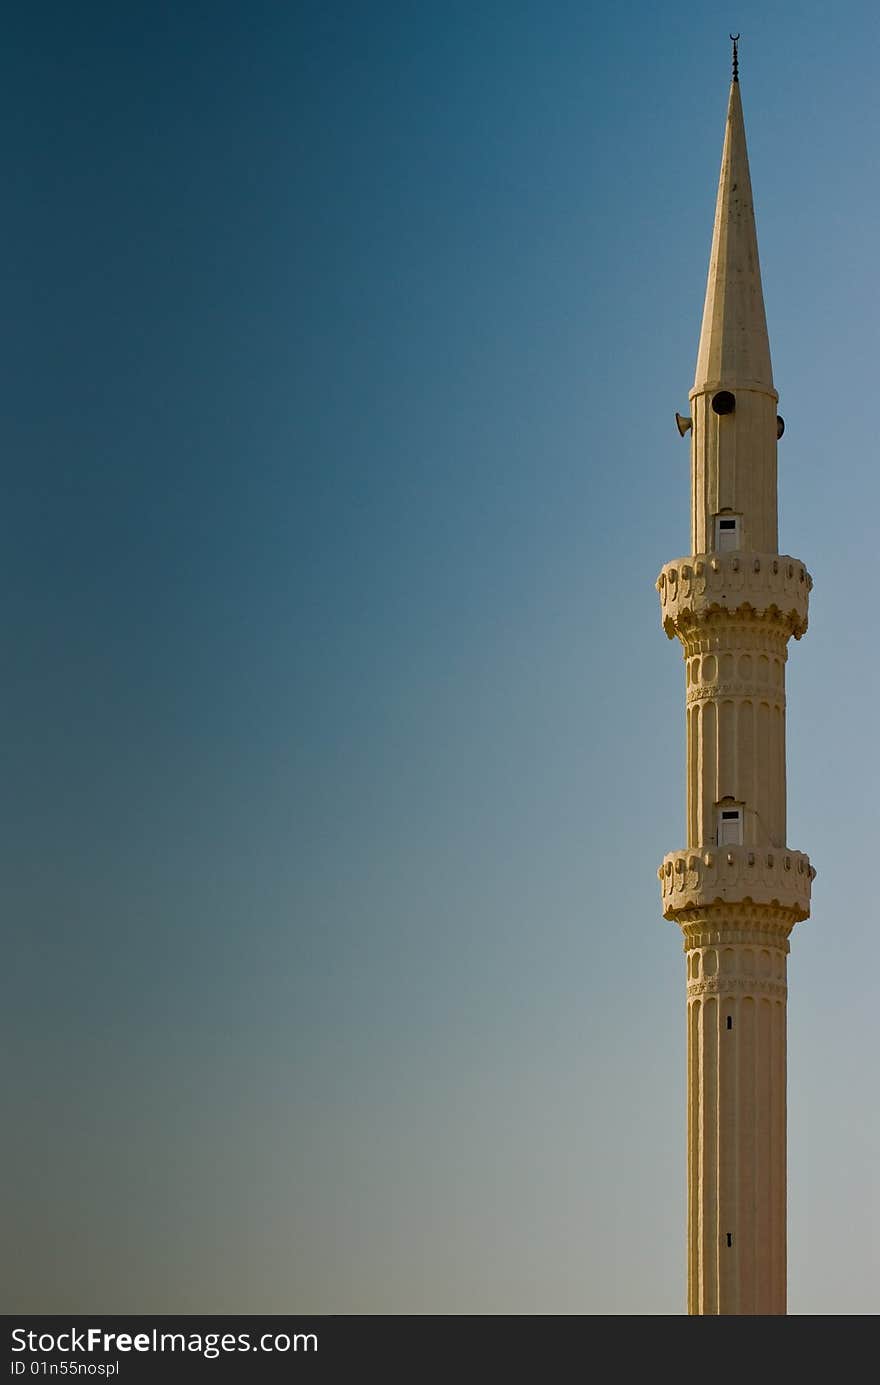 Minaret in Turkey, on the blue sky. Minaret in Turkey, on the blue sky